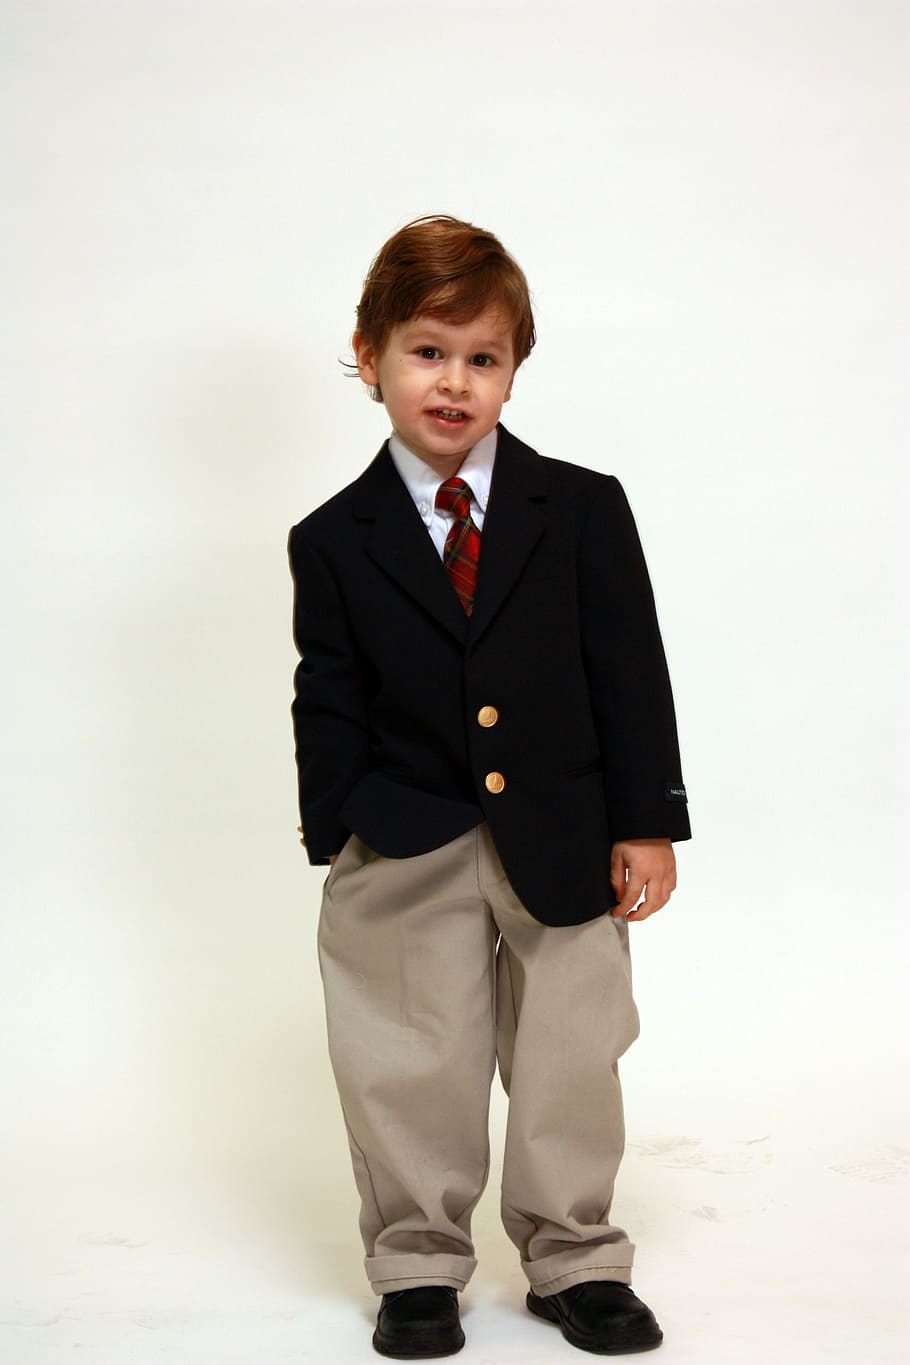 boy, suit jacket, standing, white, wall, portrait, suit, formal, handsome, jacket